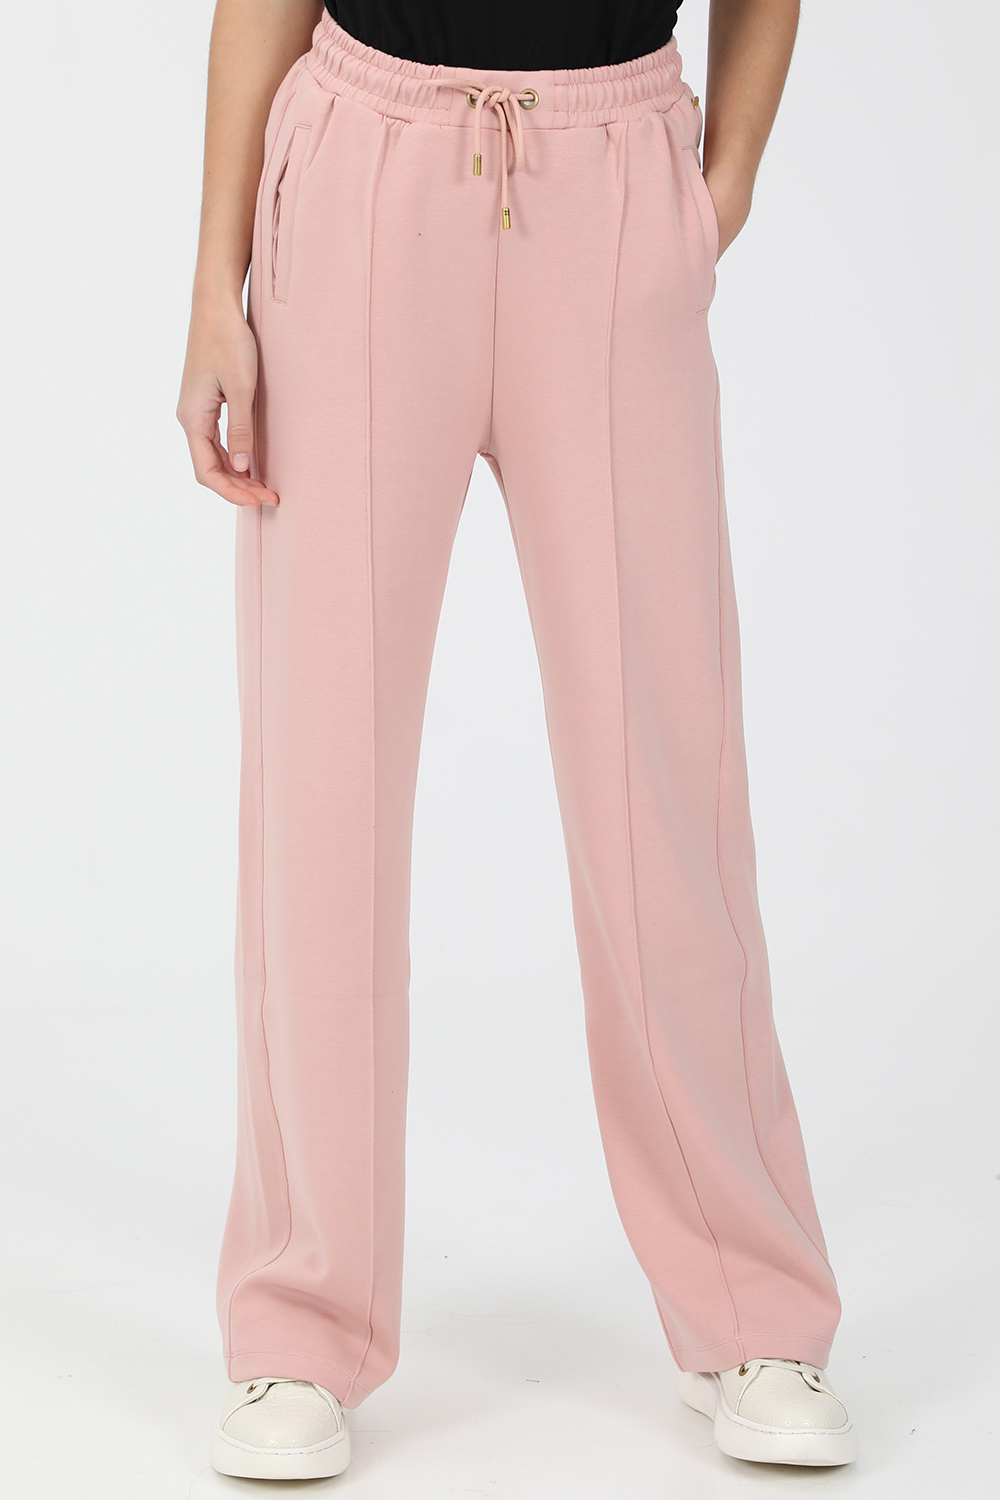 SCOTCH & SODA – Γυναικείο παντελόνι φόρμας SCOTCH & SODA Soft sweat pants ροζ 1821071.0-00P3